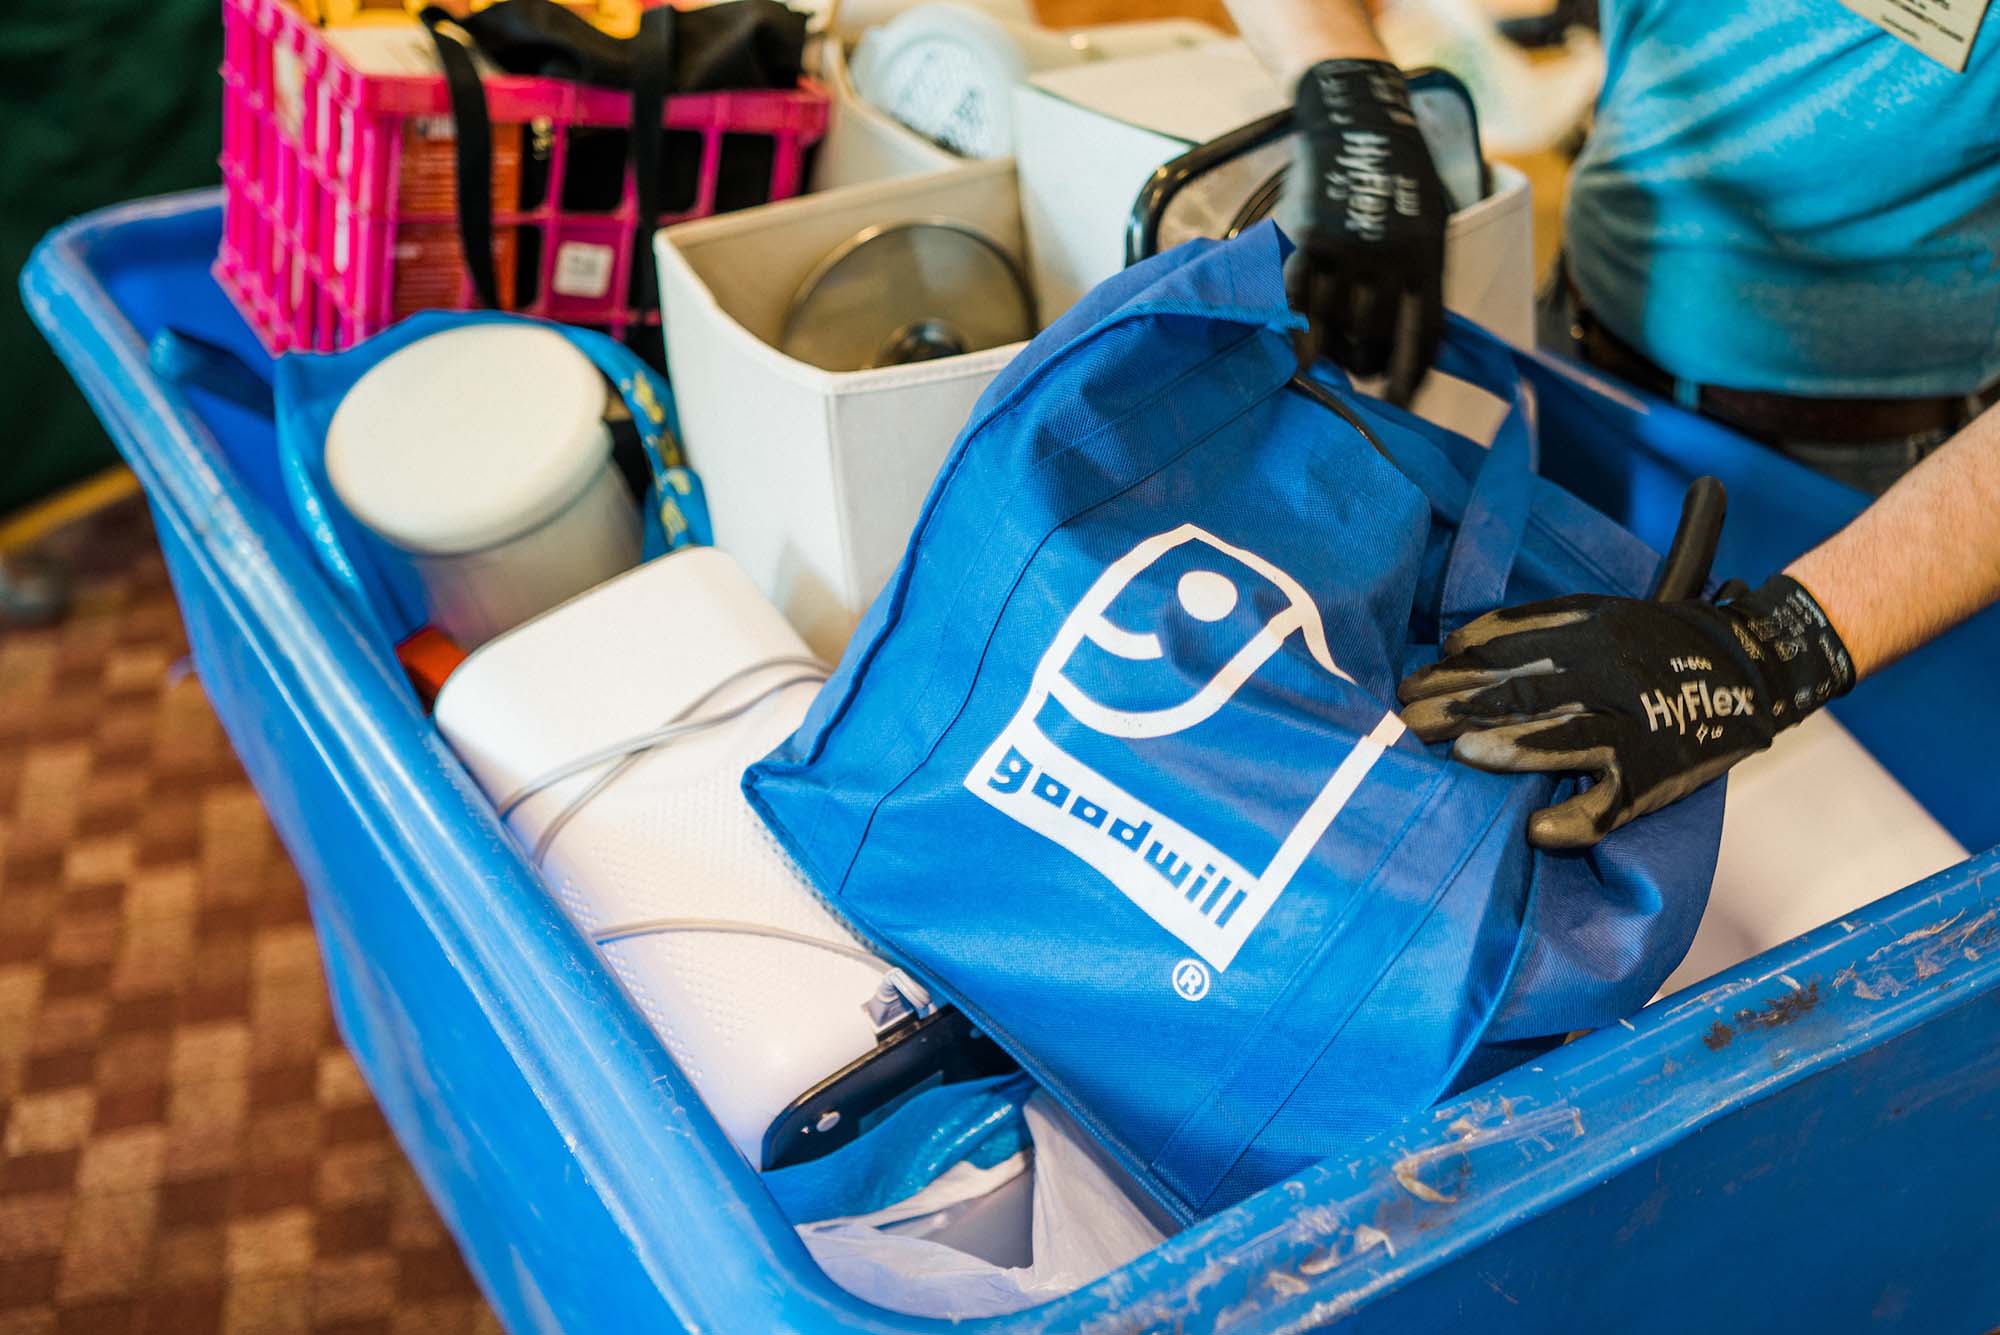 Photo: Blue tote bag photo "Goodwill" Logo inside a big blue donation box